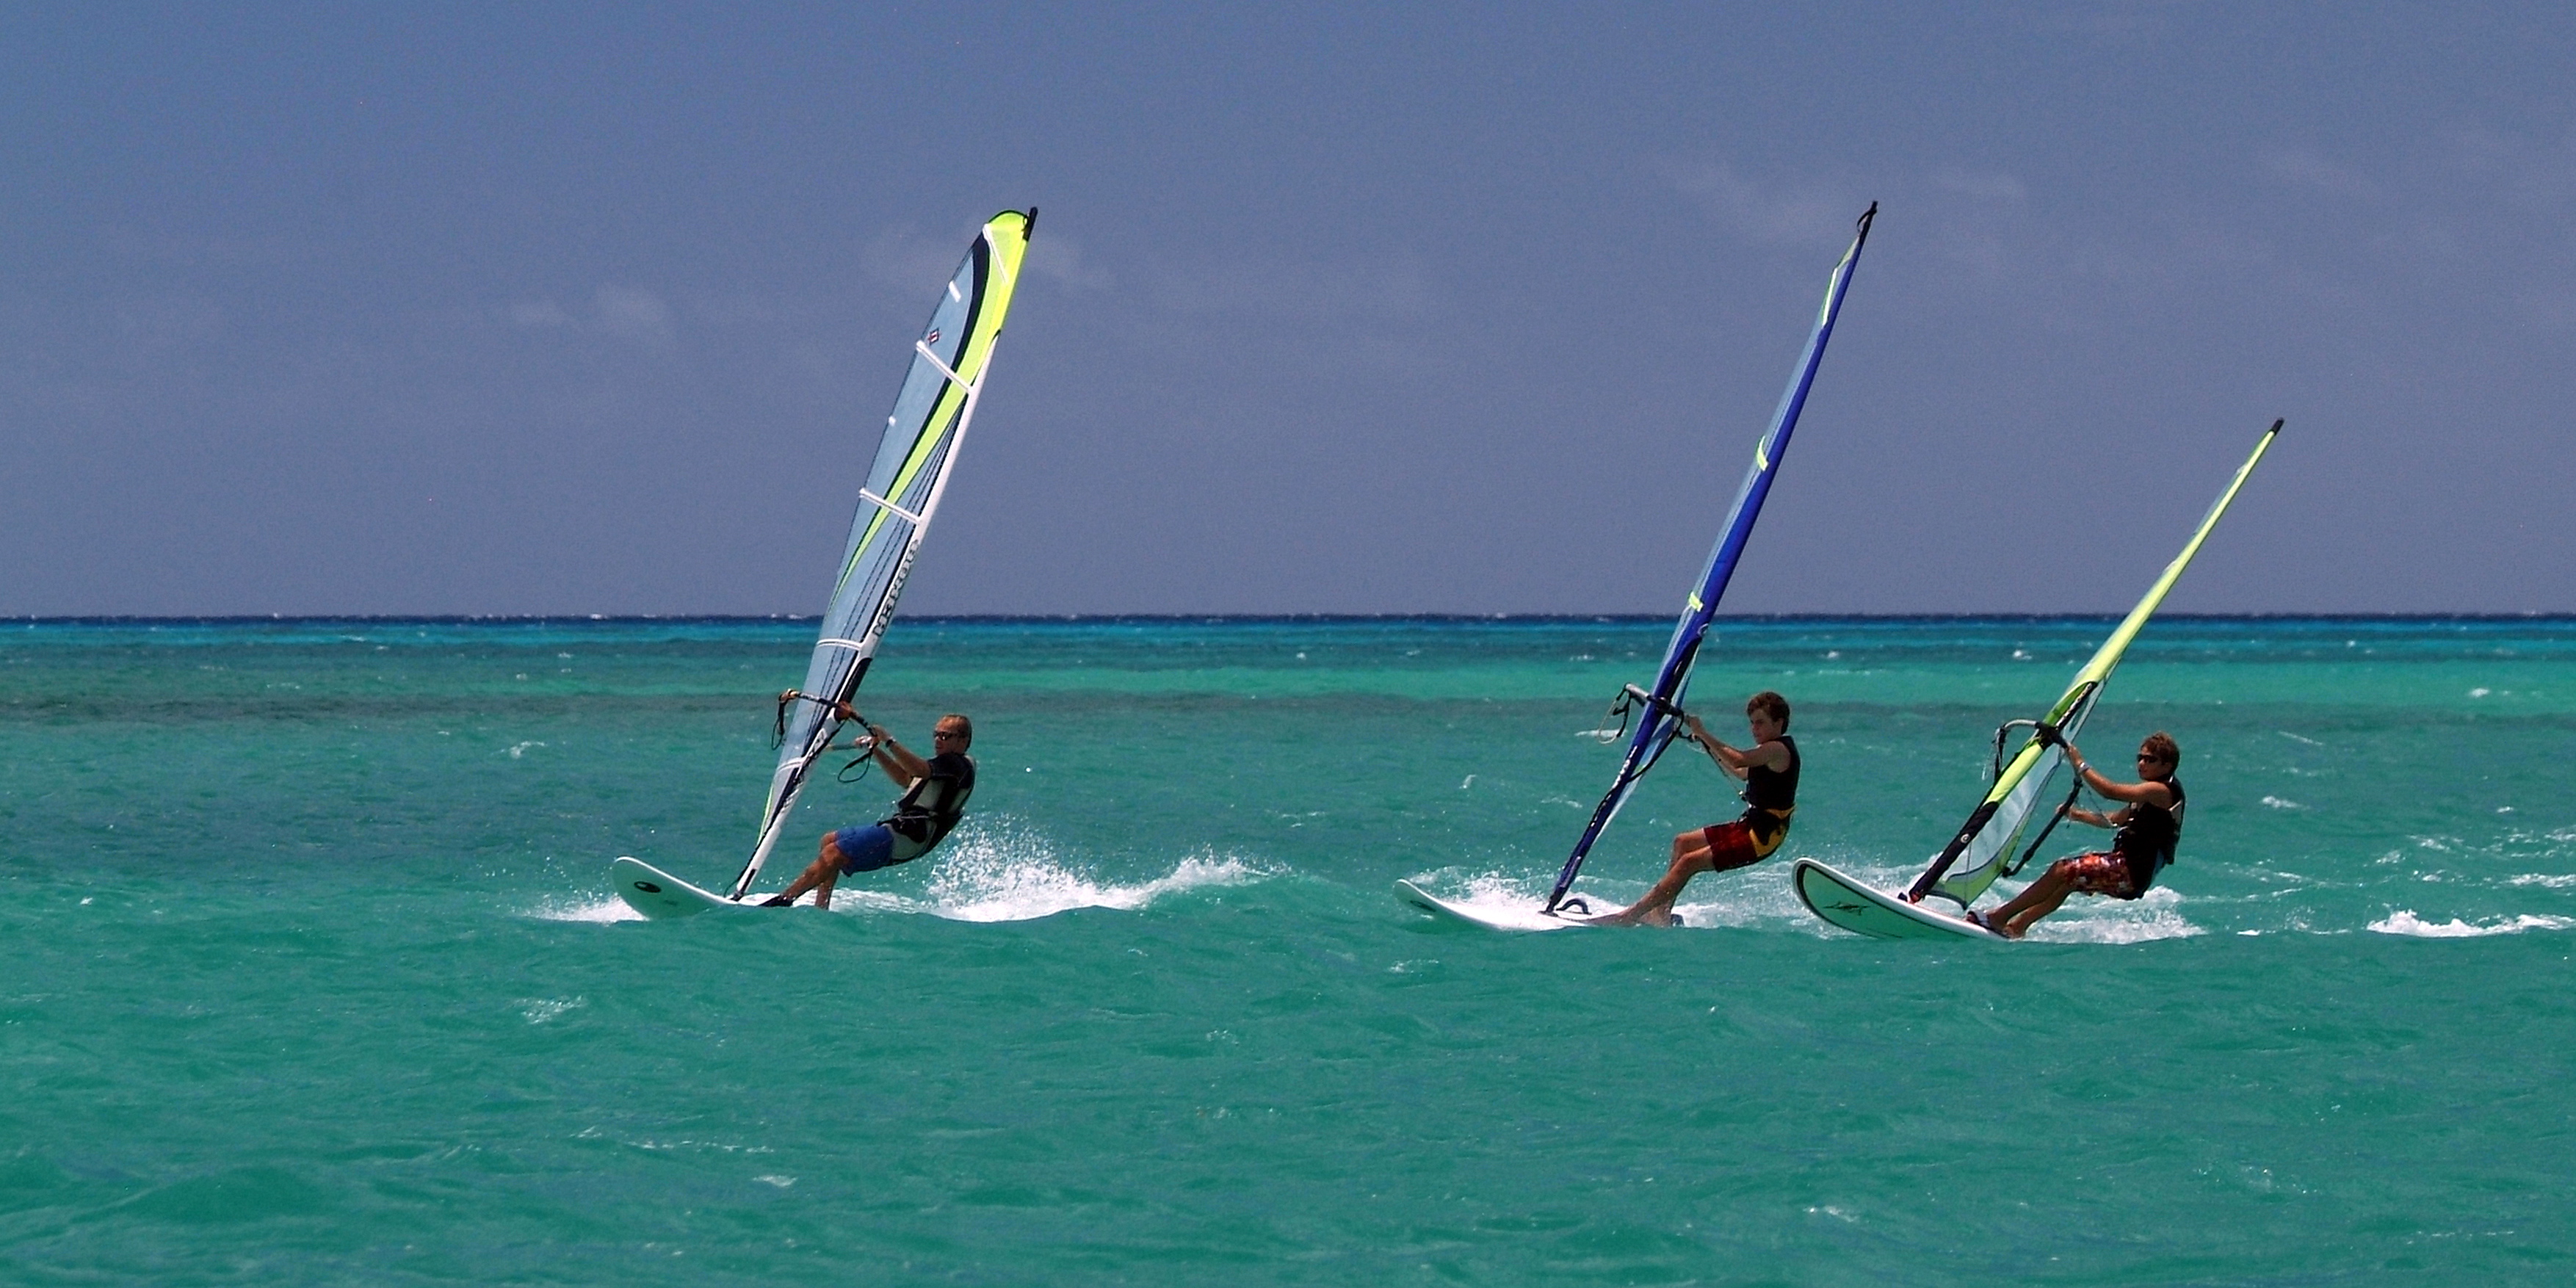 Three windsurfers near 20 Degrees South, Mauritius